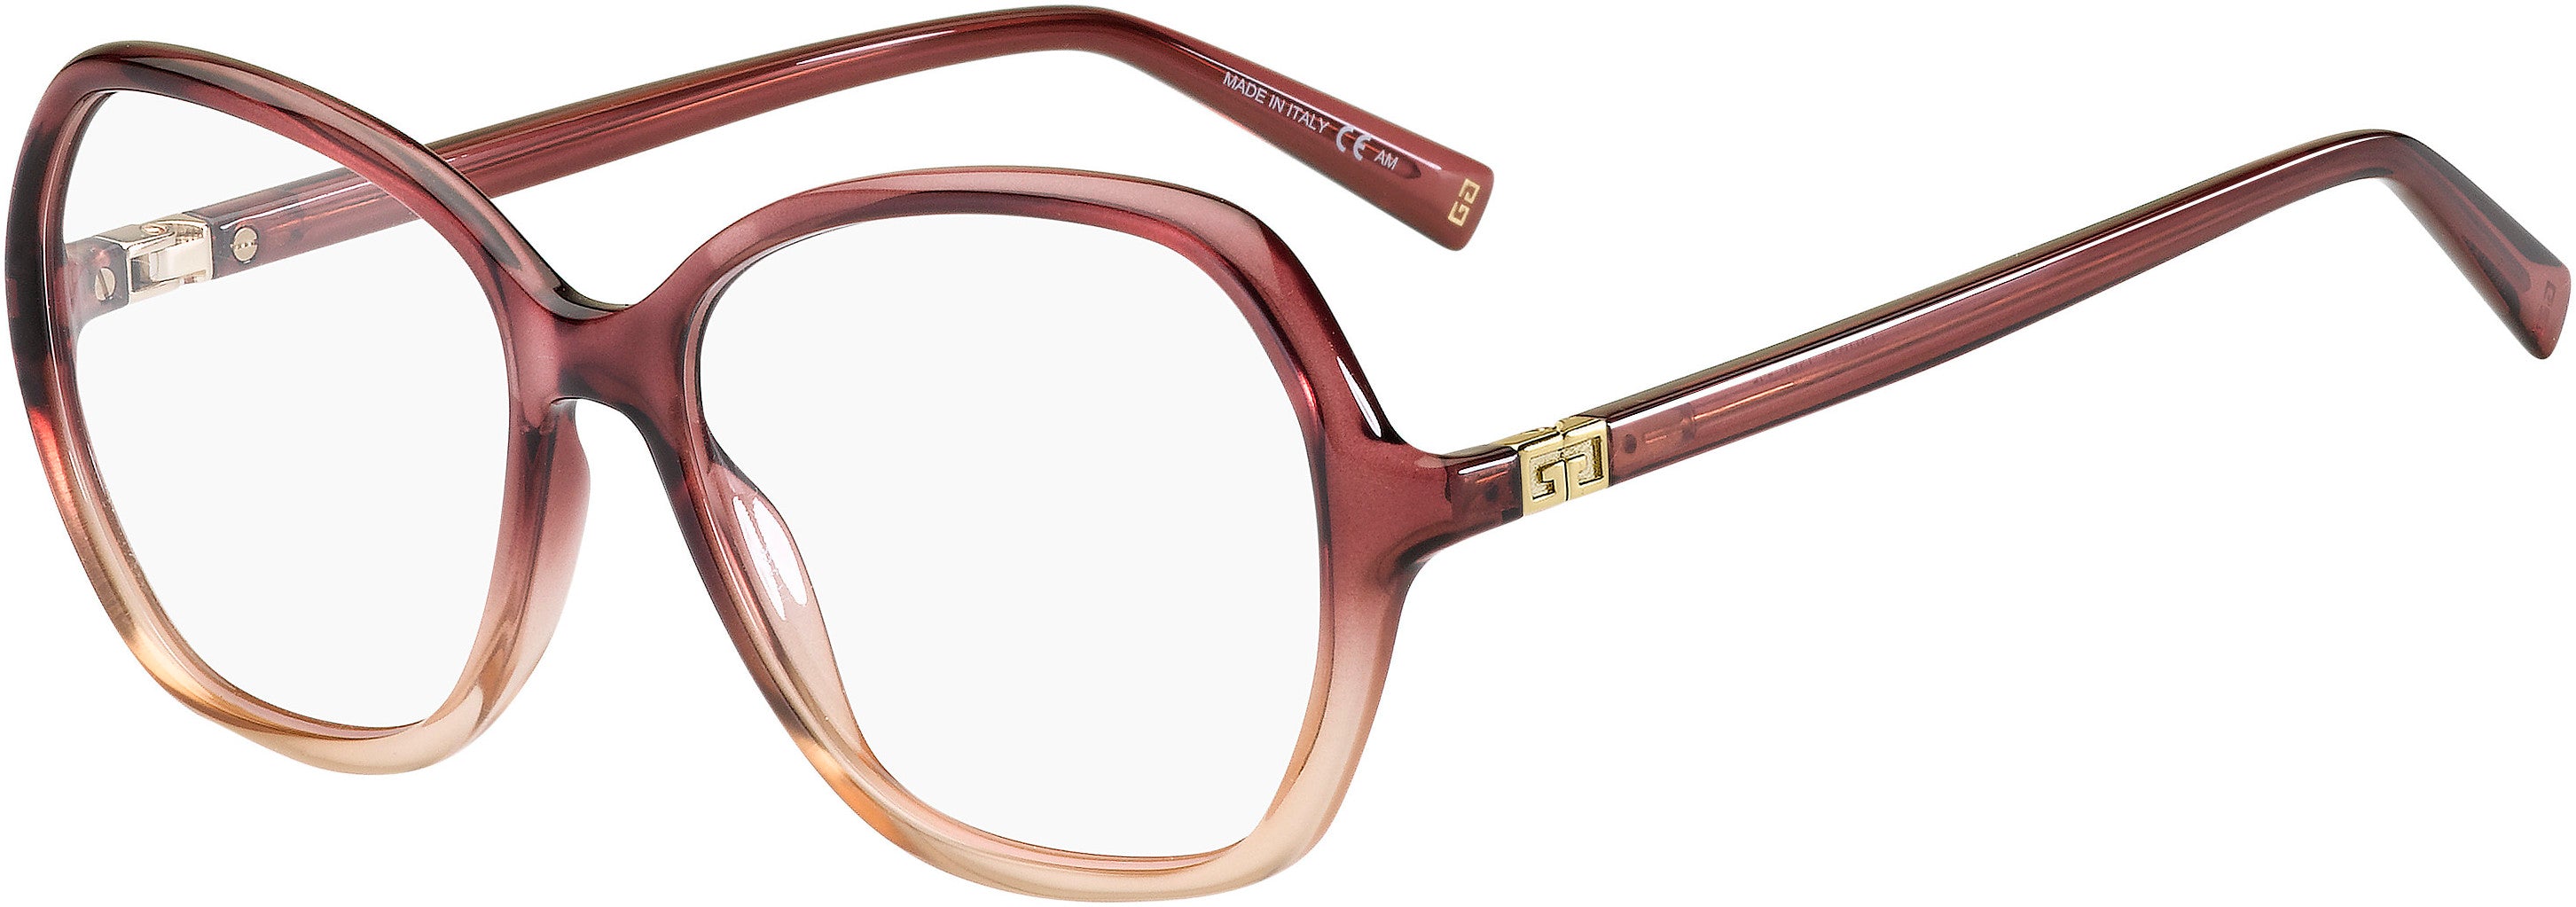  Givenchy 0141 Rectangular Eyeglasses 0C9N-0C9N  Pink Nude (00 Demo Lens)